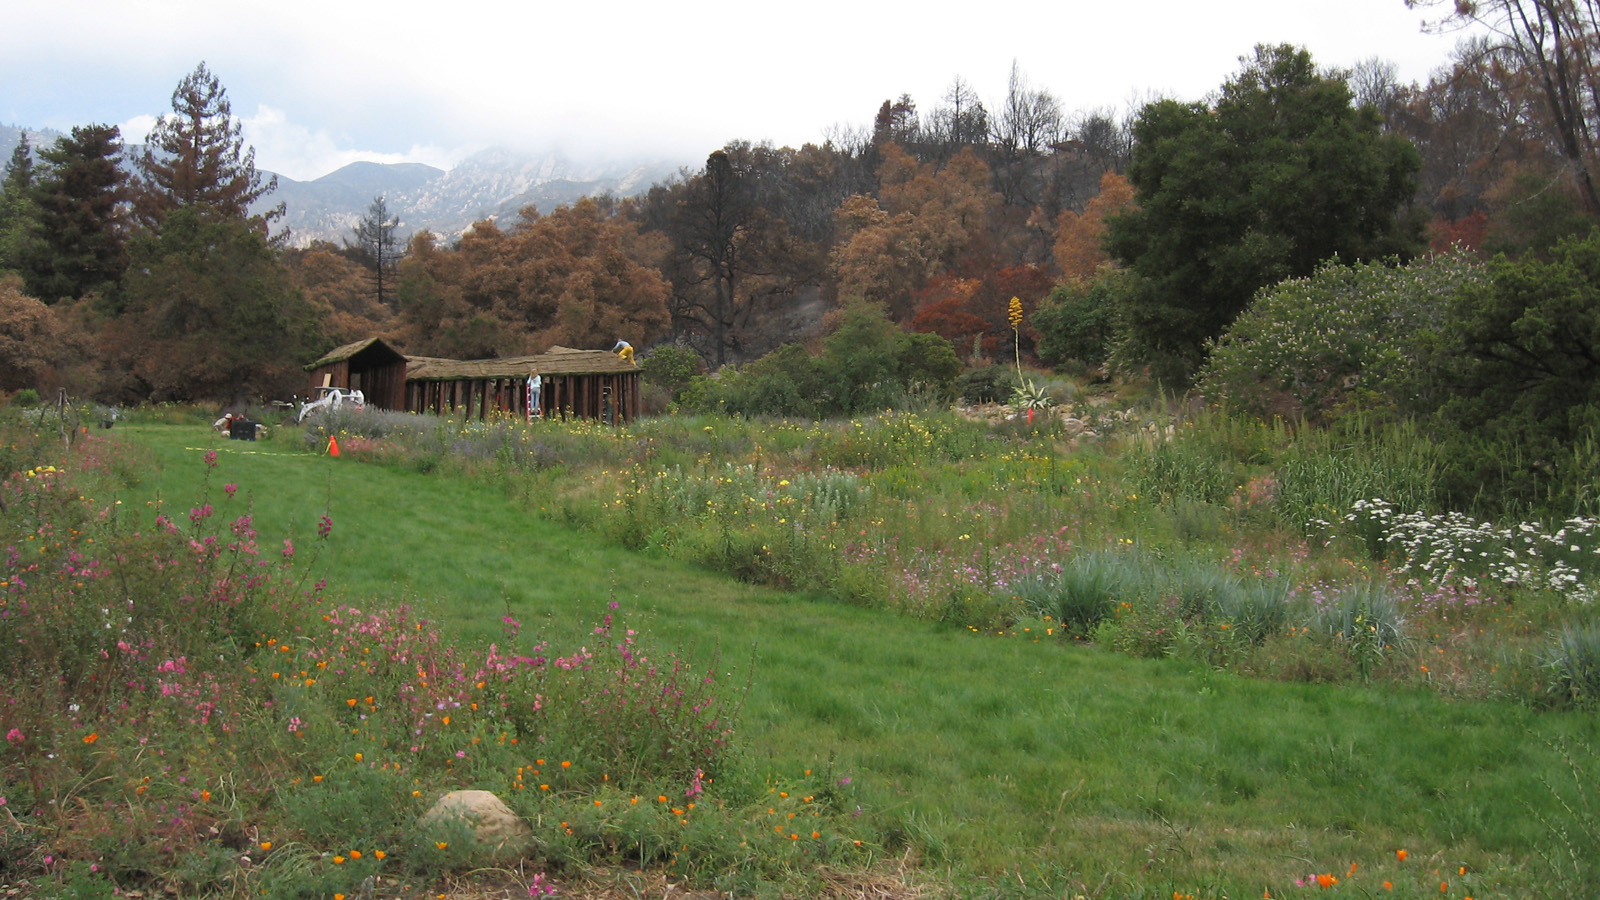 Santa Barbara Botanic Garden The Cultural Landscape Foundation